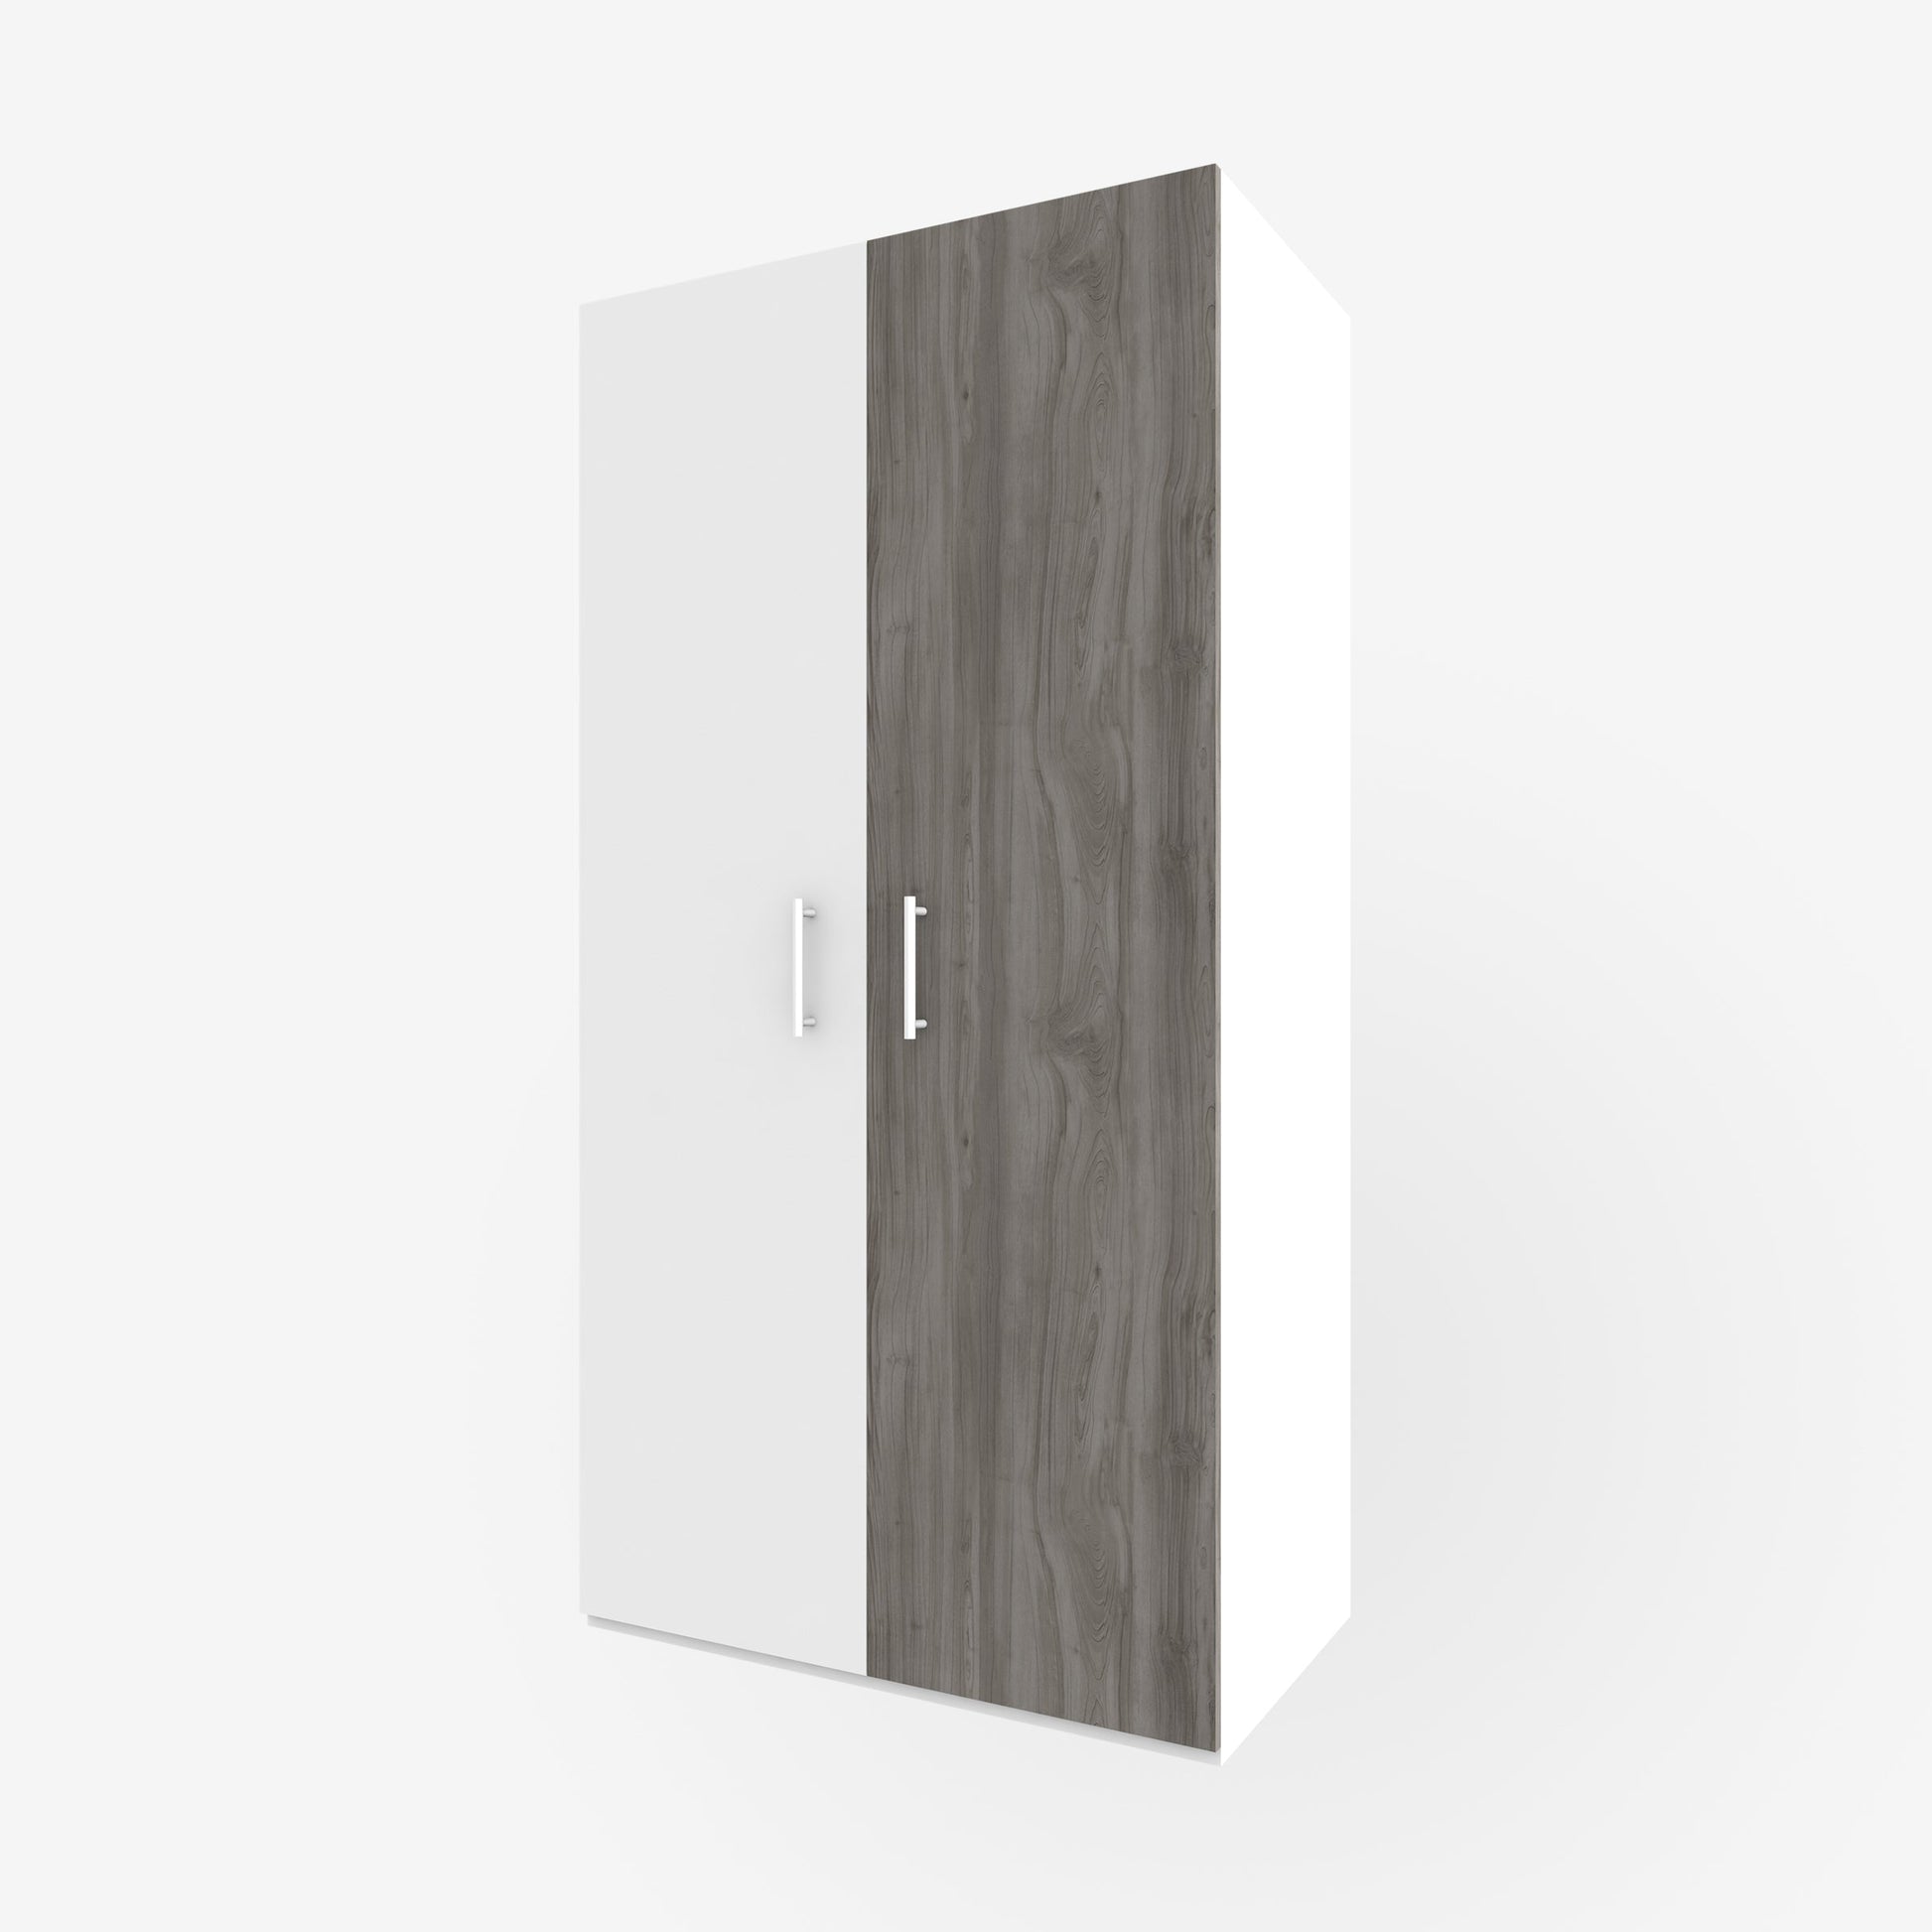 19.5" x 93" warm wood tone echowood slab door for Ikea or Swedeboxx pax closet cabinet